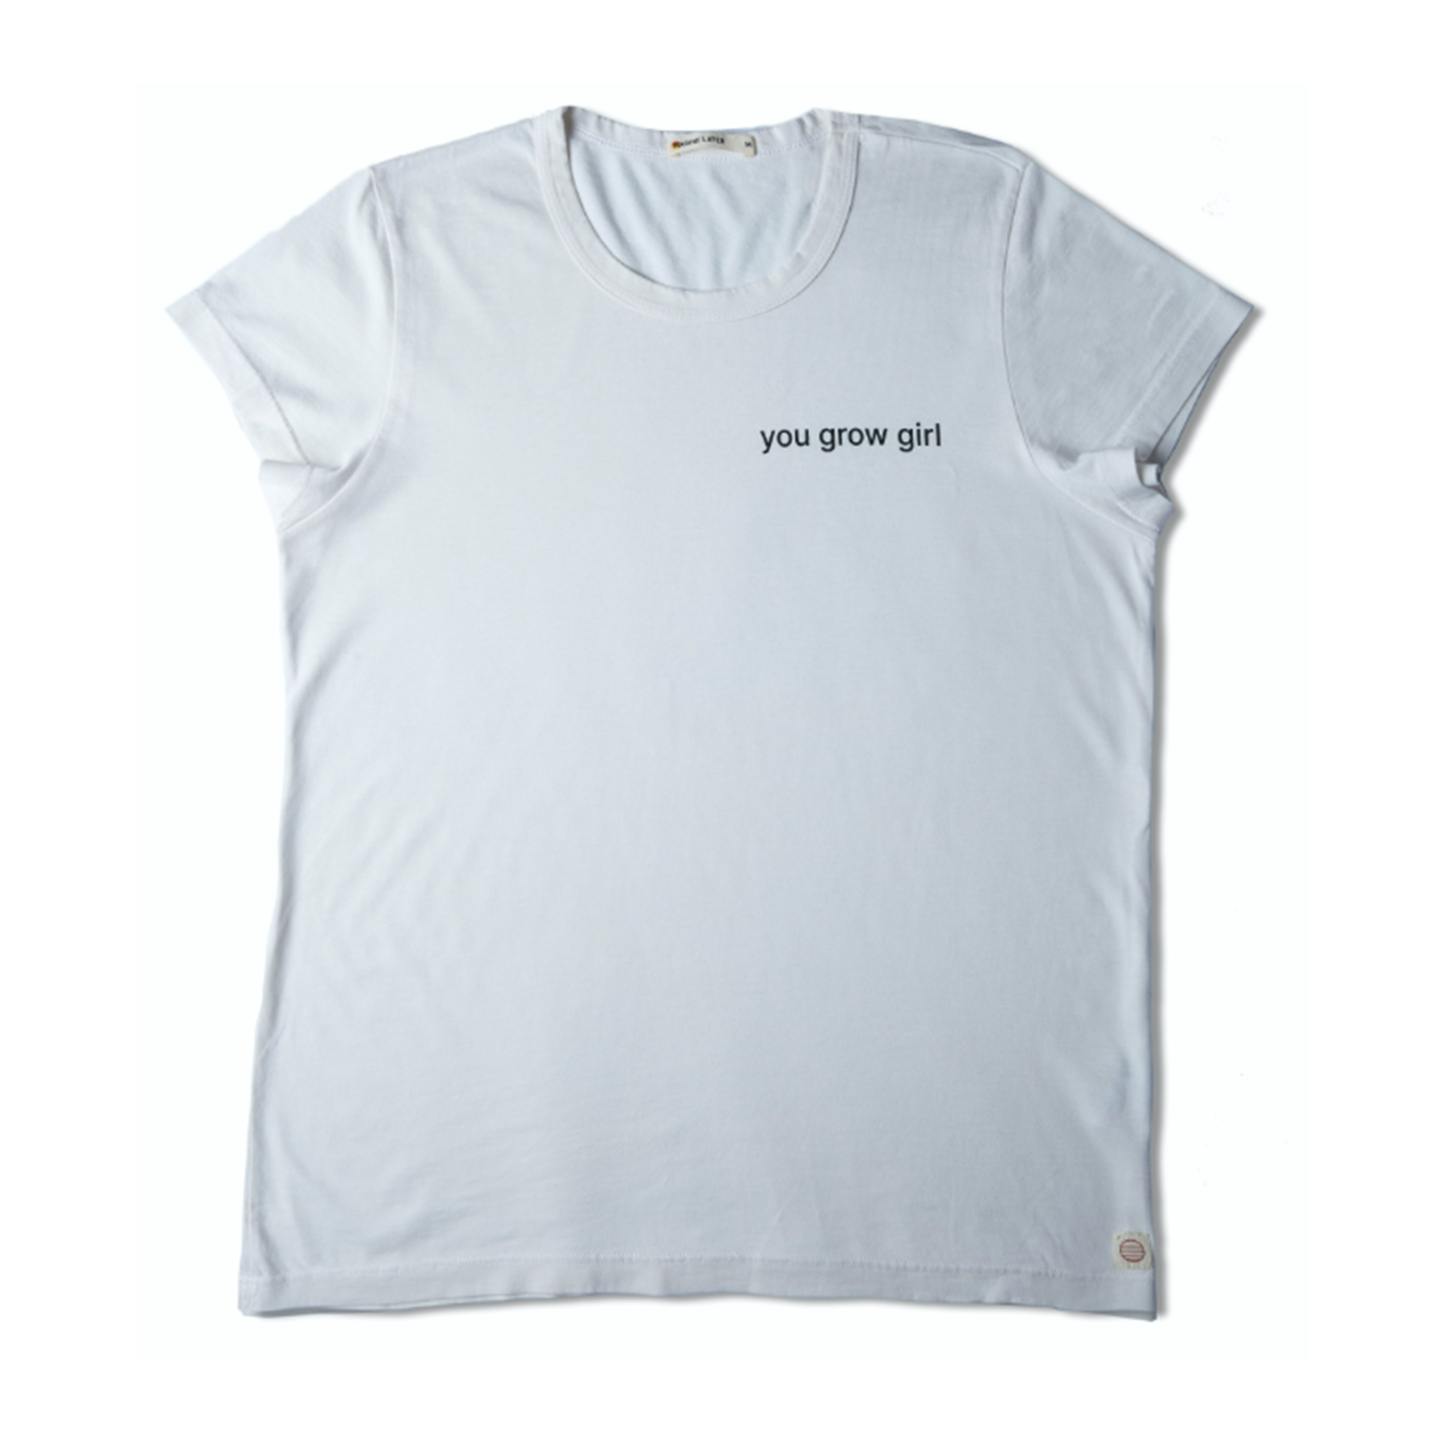 You Grow Girl T-Shirt Product Image